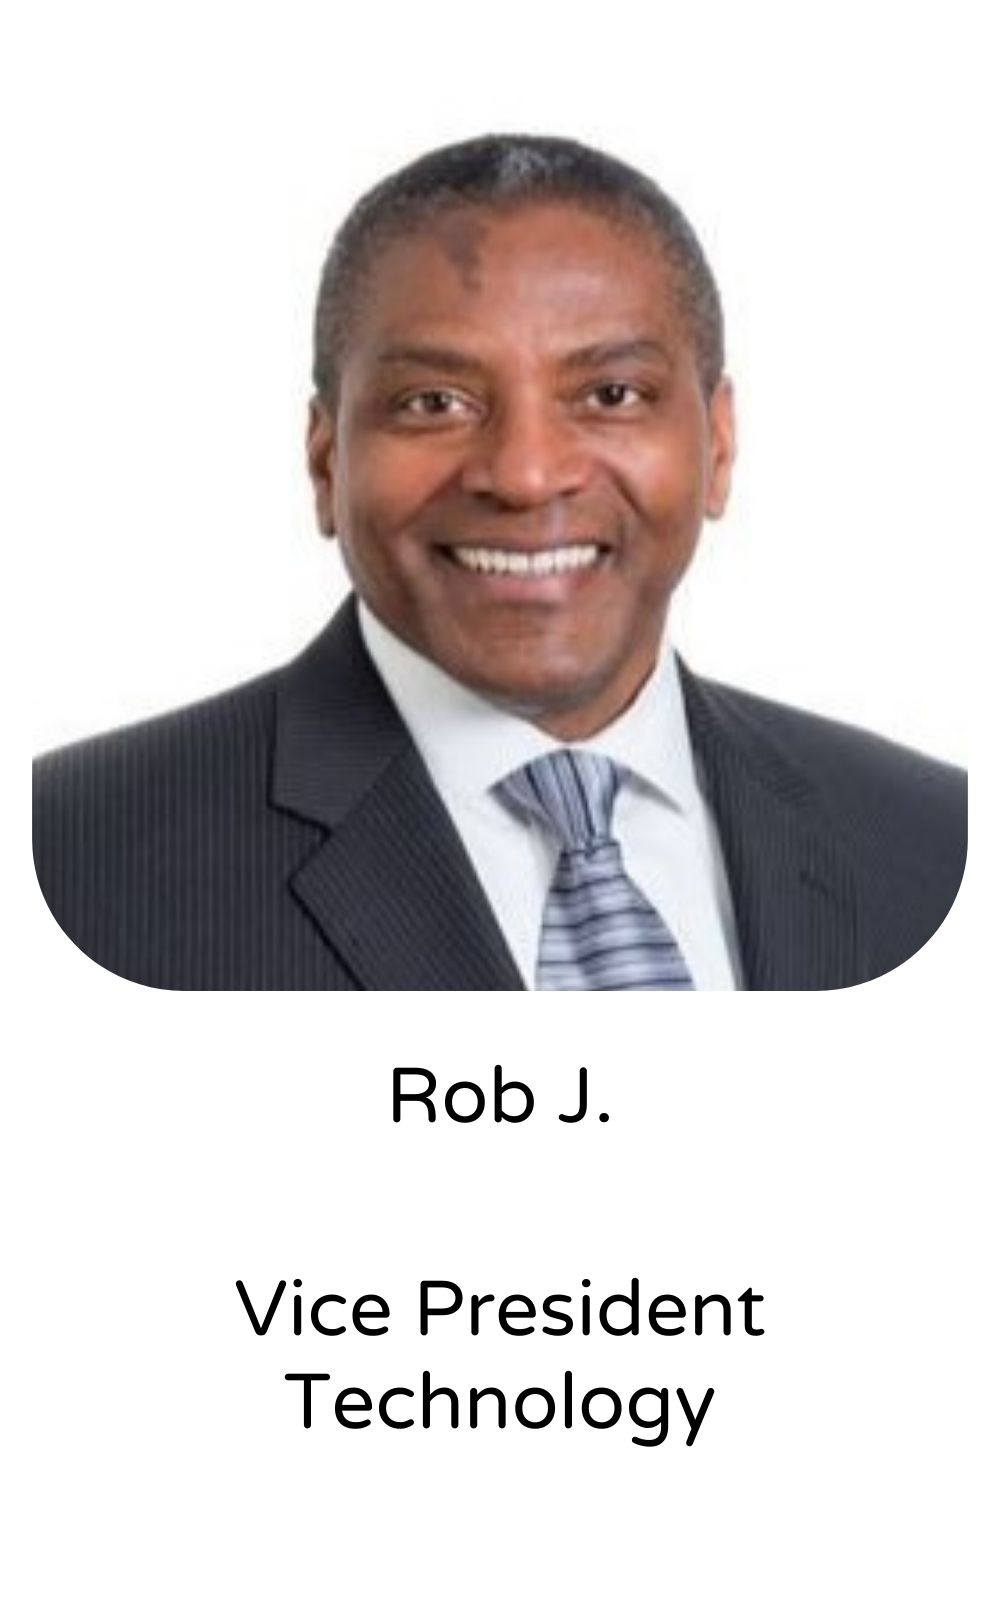 Rob J, Vice President, Technology